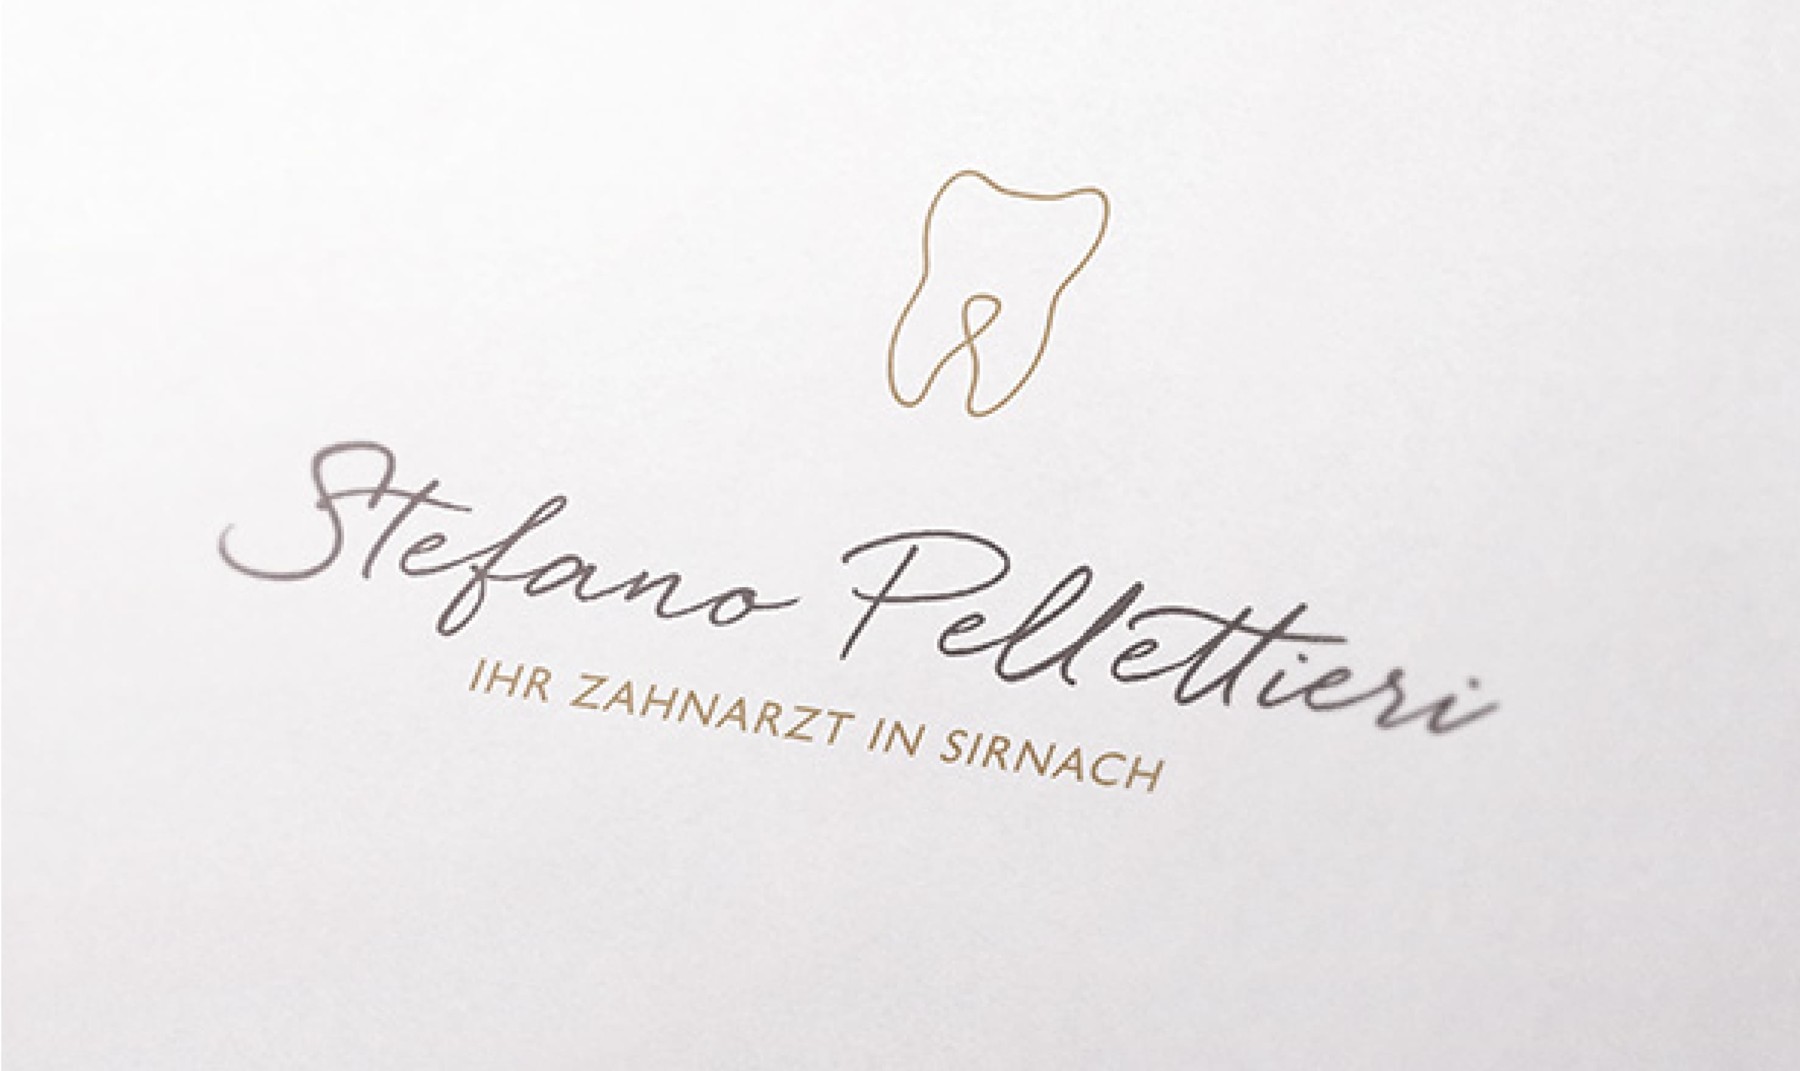 Stefano Pellettieri - Logo mit Claim